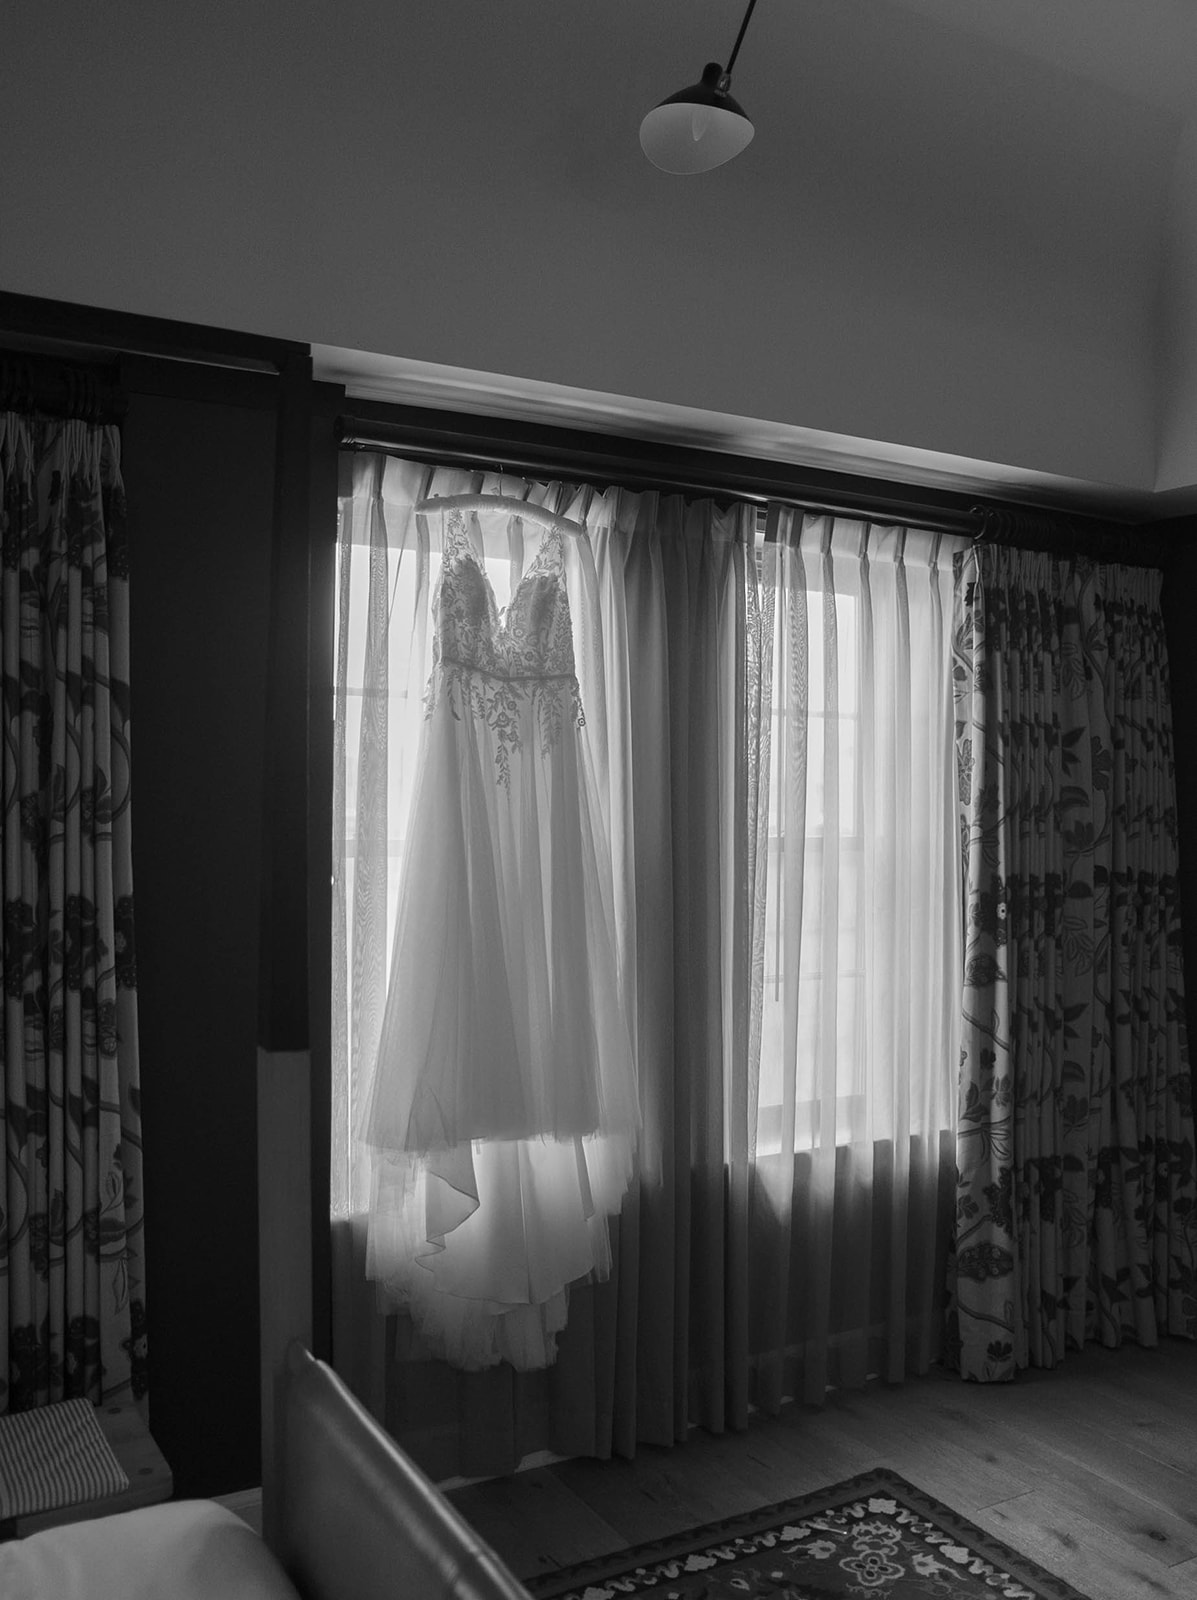 BRIDALS WEDDING GOWN HANGING UP IN WINDOW